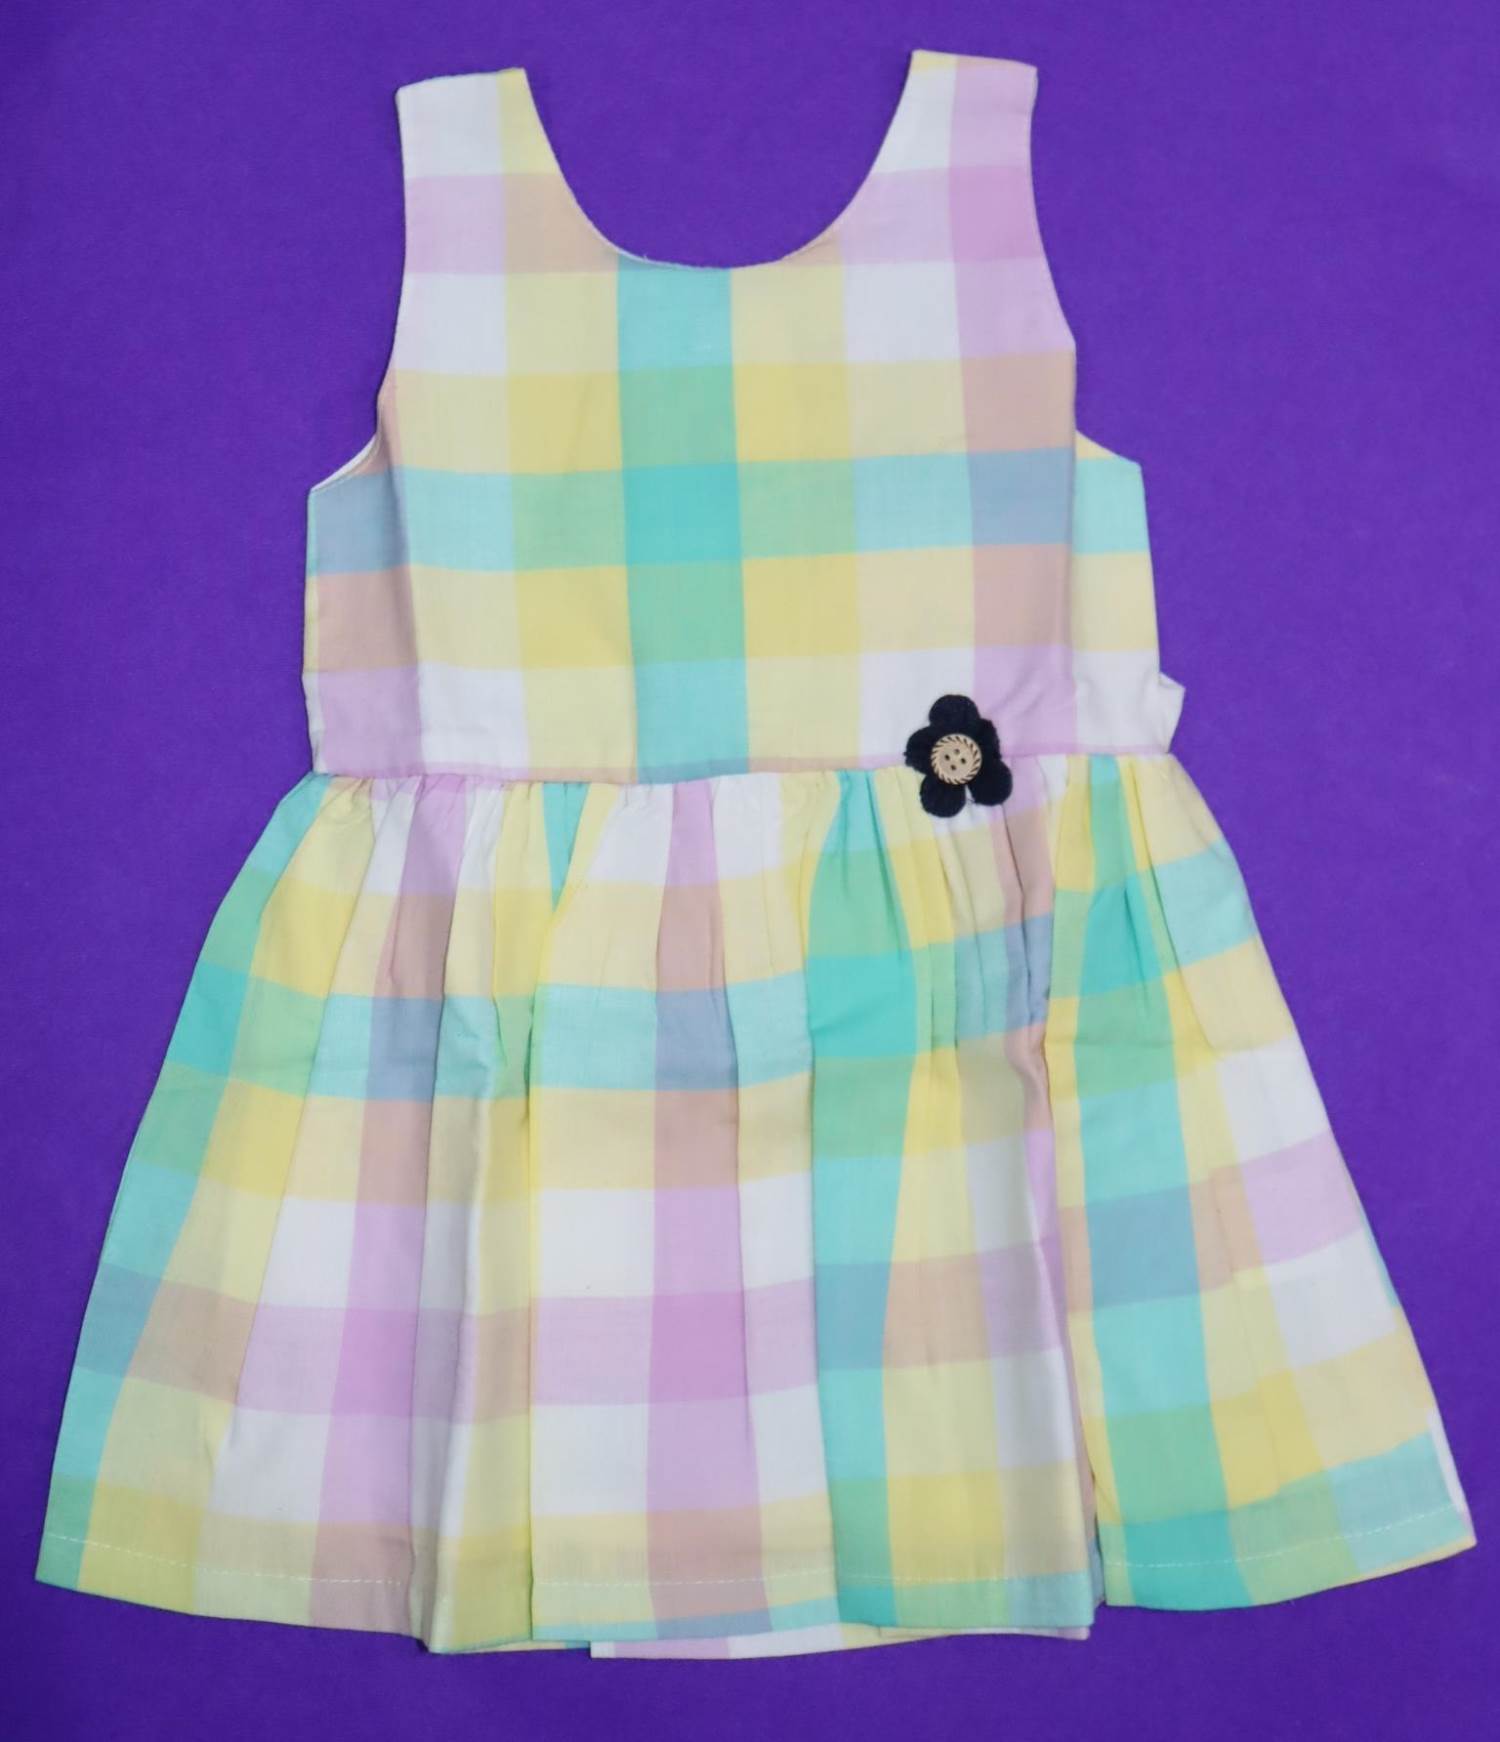 LC Waikiki Square Neck Short Sleeve Printed Cotton Baby Girl Dress price in  Egypt  Jumia Egypt  kanbkam